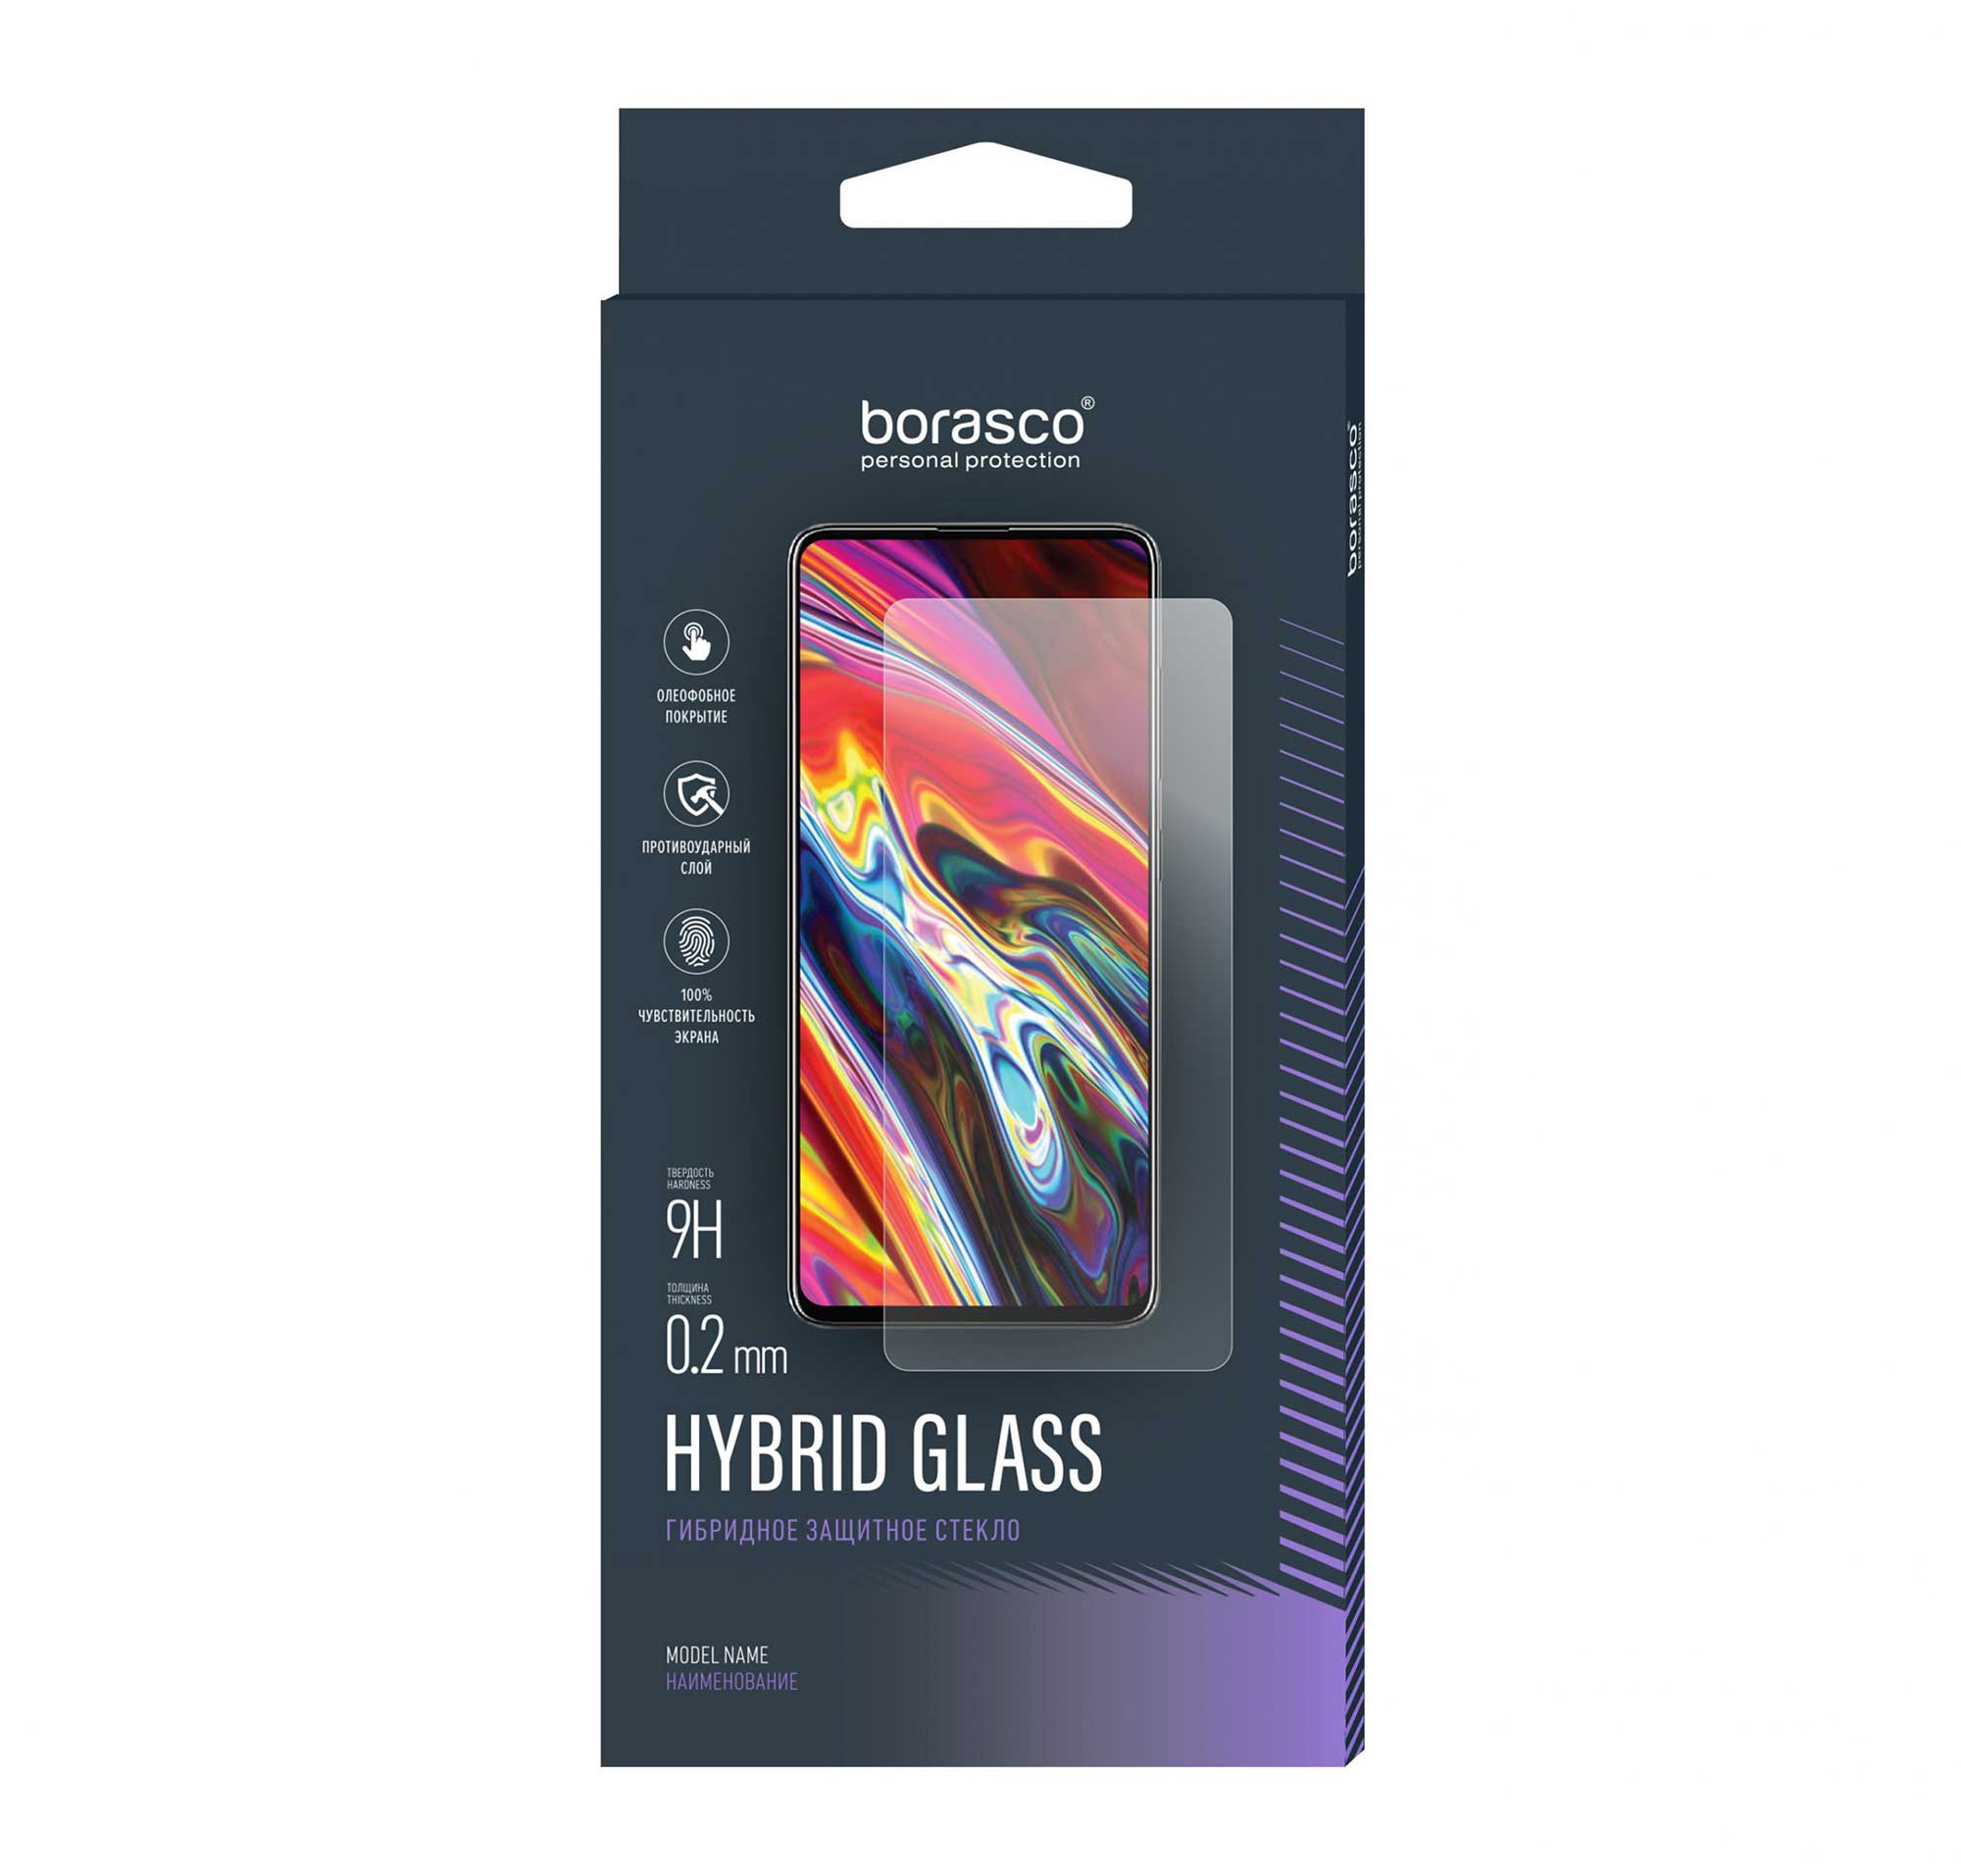 Защитное стекло Hybrid Glass для OnePlus Nord N10 защитное стекло для смартфона krutoff для oneplus nord 2t